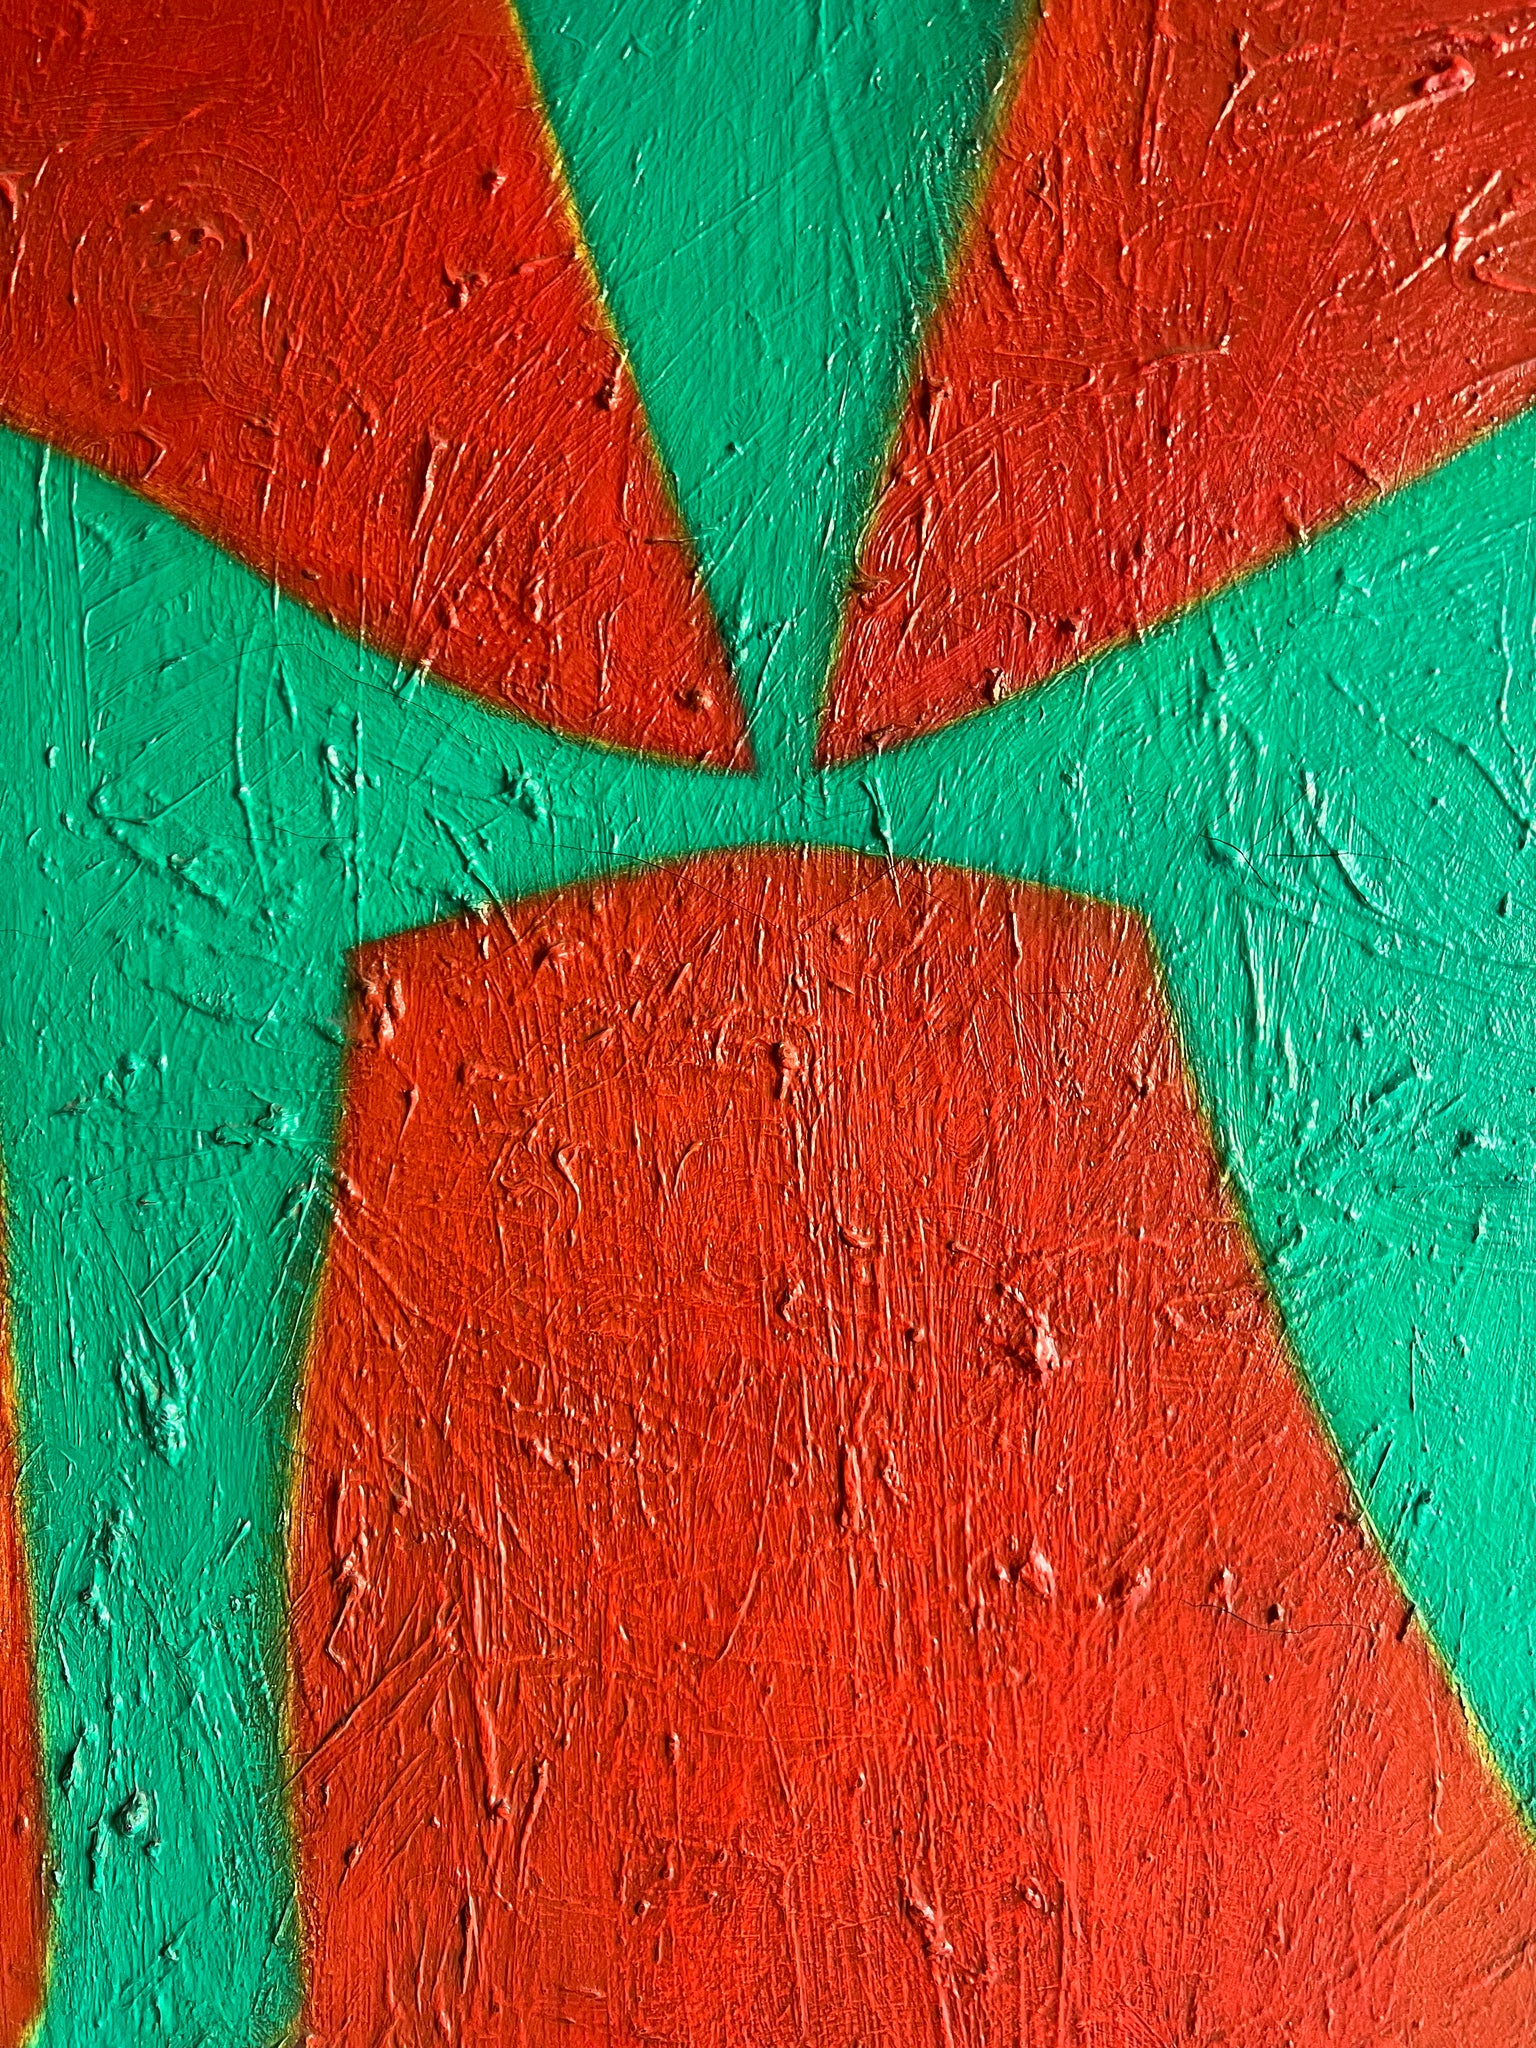 Green Pins Oil on Canvas by Marius Van Dijk 1988